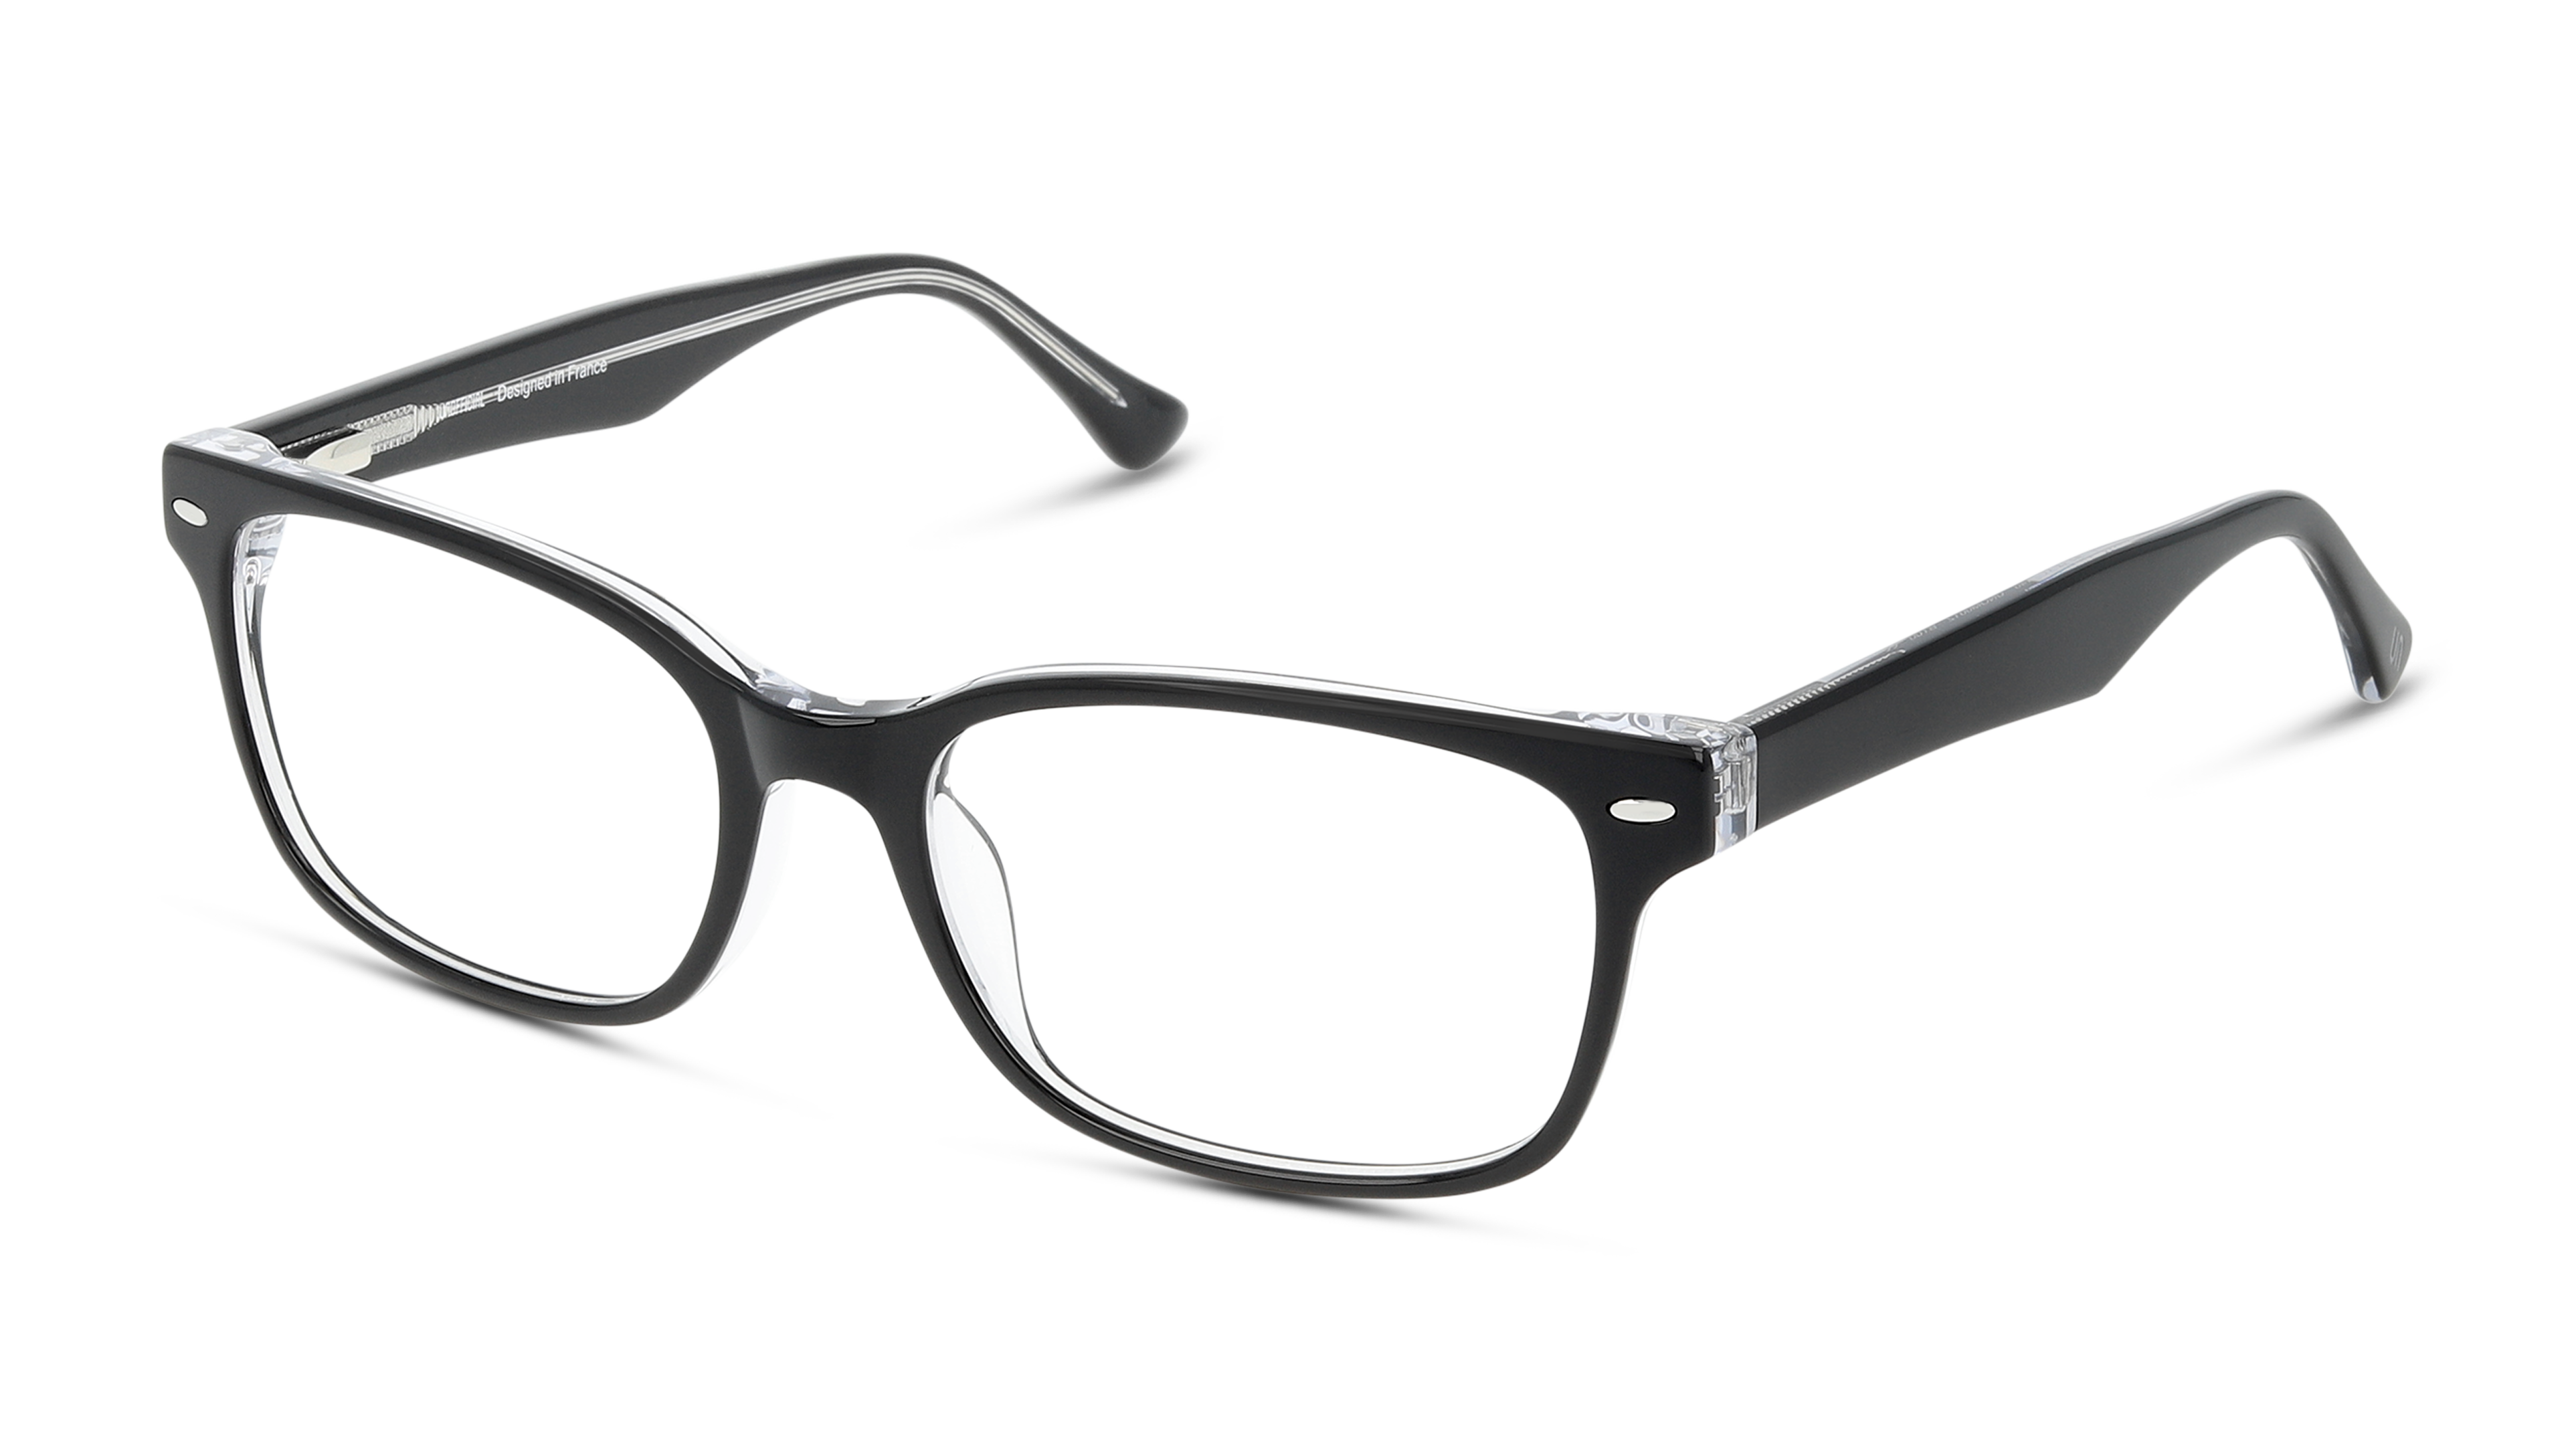 Angle_Left01 Unofficial UNOM0012 (BT00) Youth Glasses Transparent / Transparent, Black